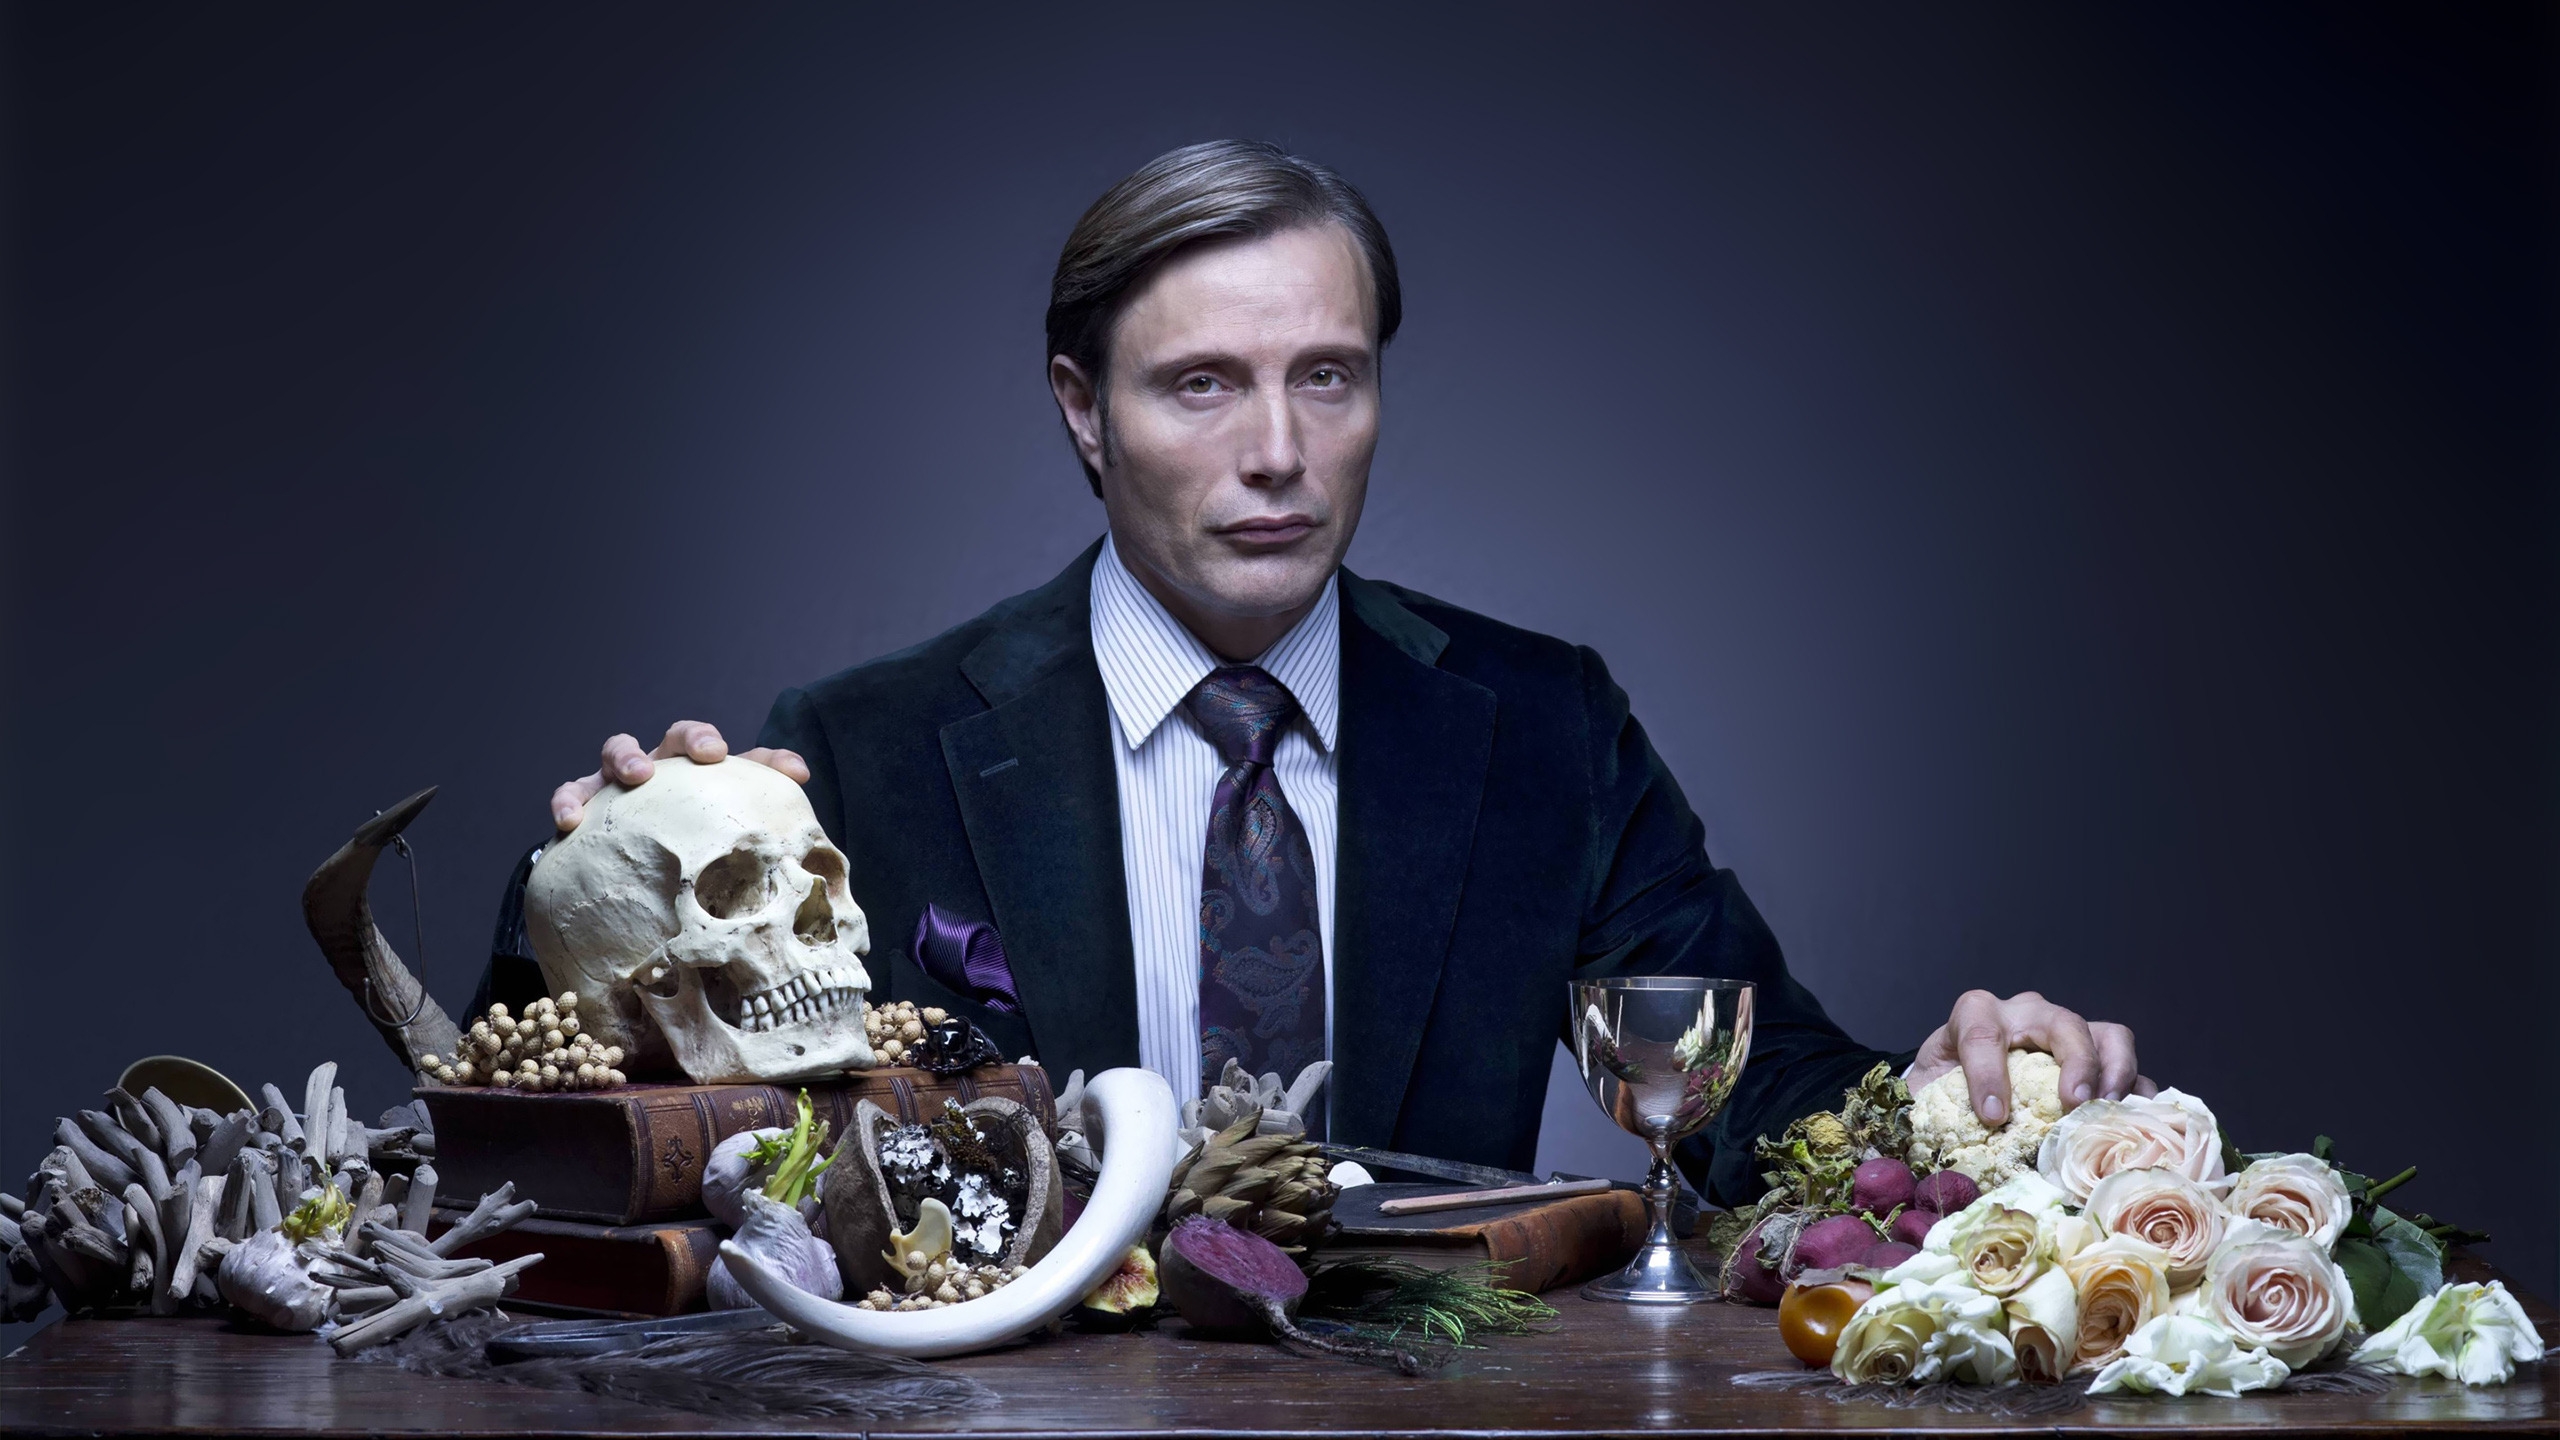 Dr Hannibal Lecter for 2560x1440 HDTV resolution